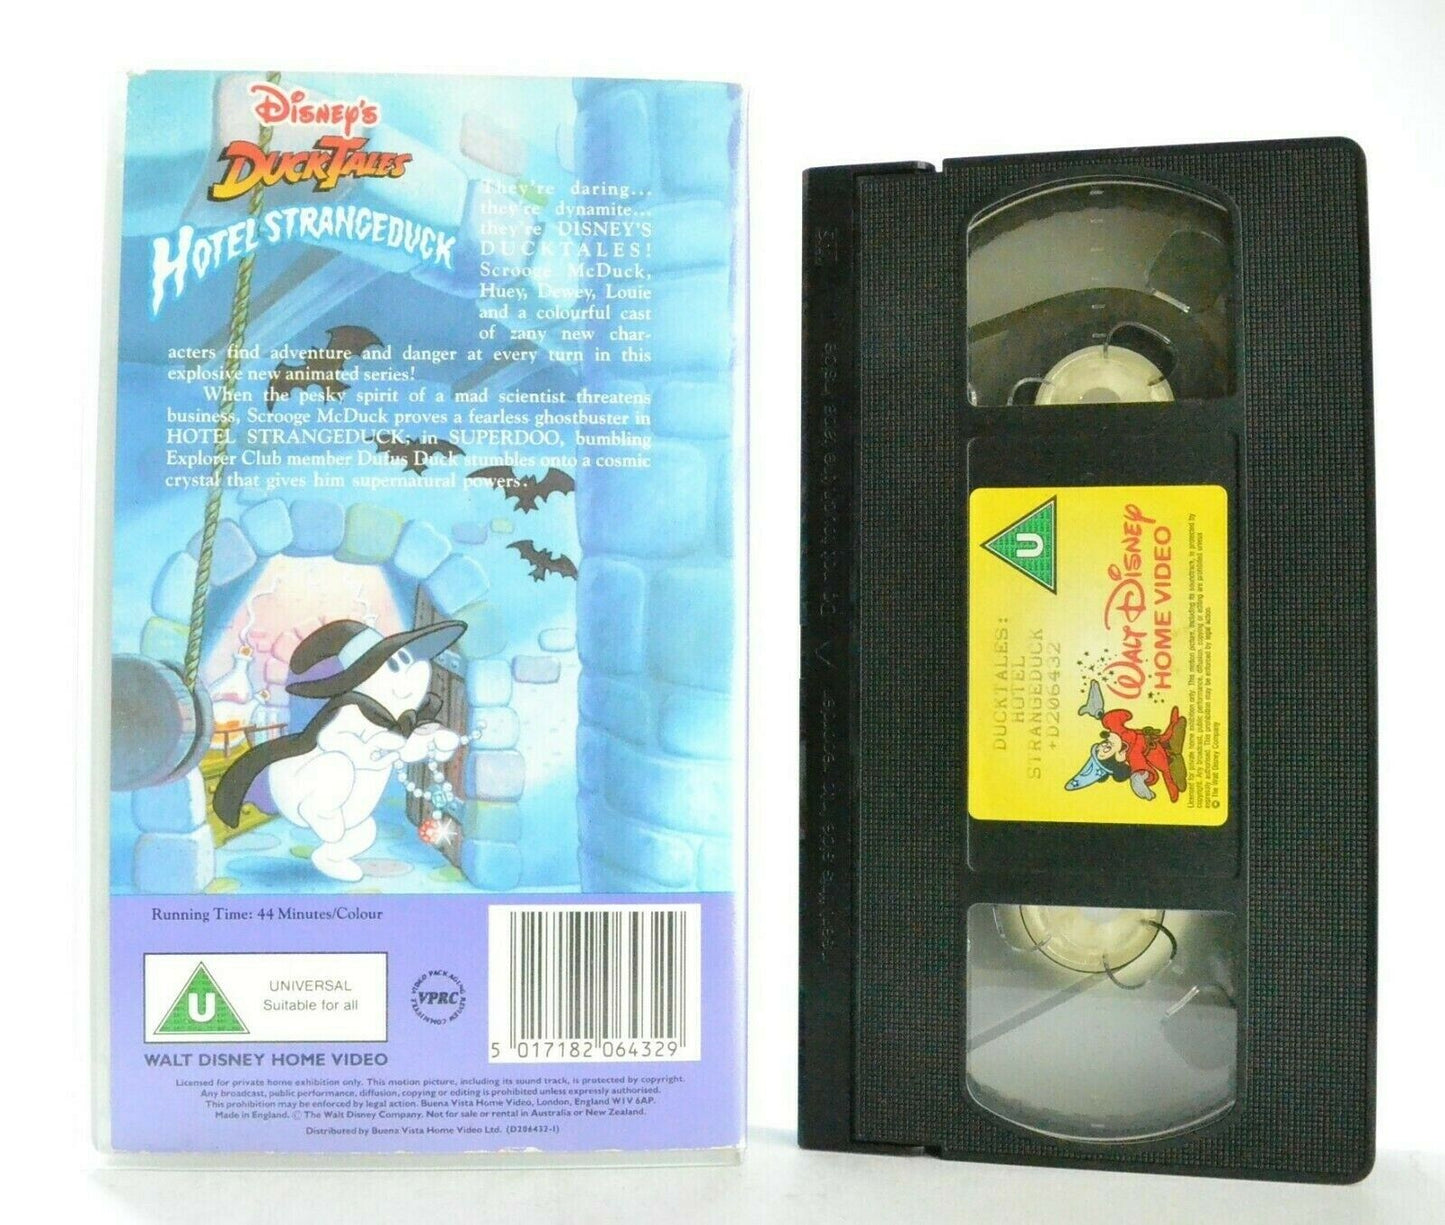 Duck Tales: Hotel Strangeduck - Disney - Animated Adventures - Children's - VHS-